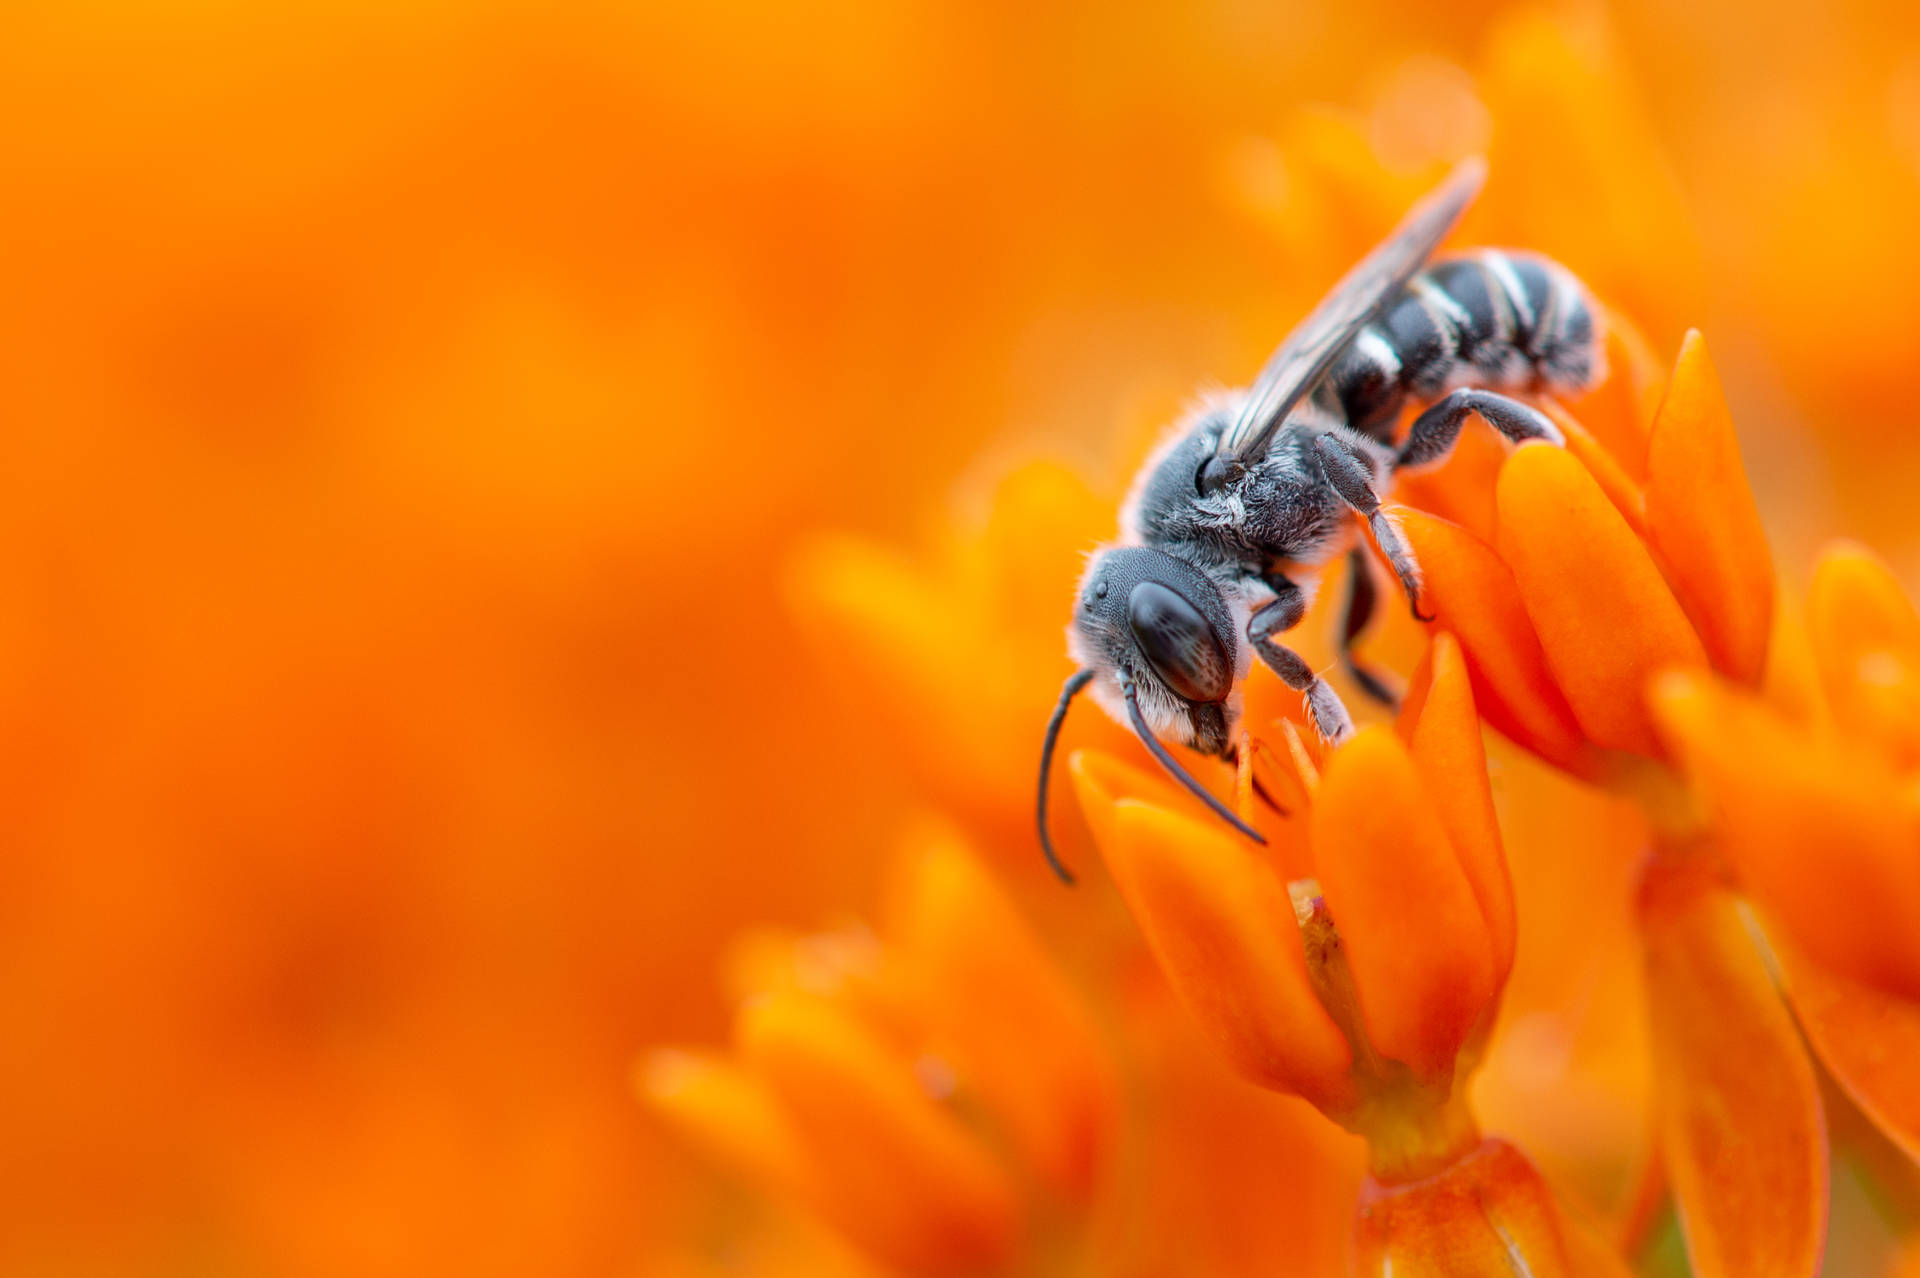 Insect On Vibrant Orange Flower